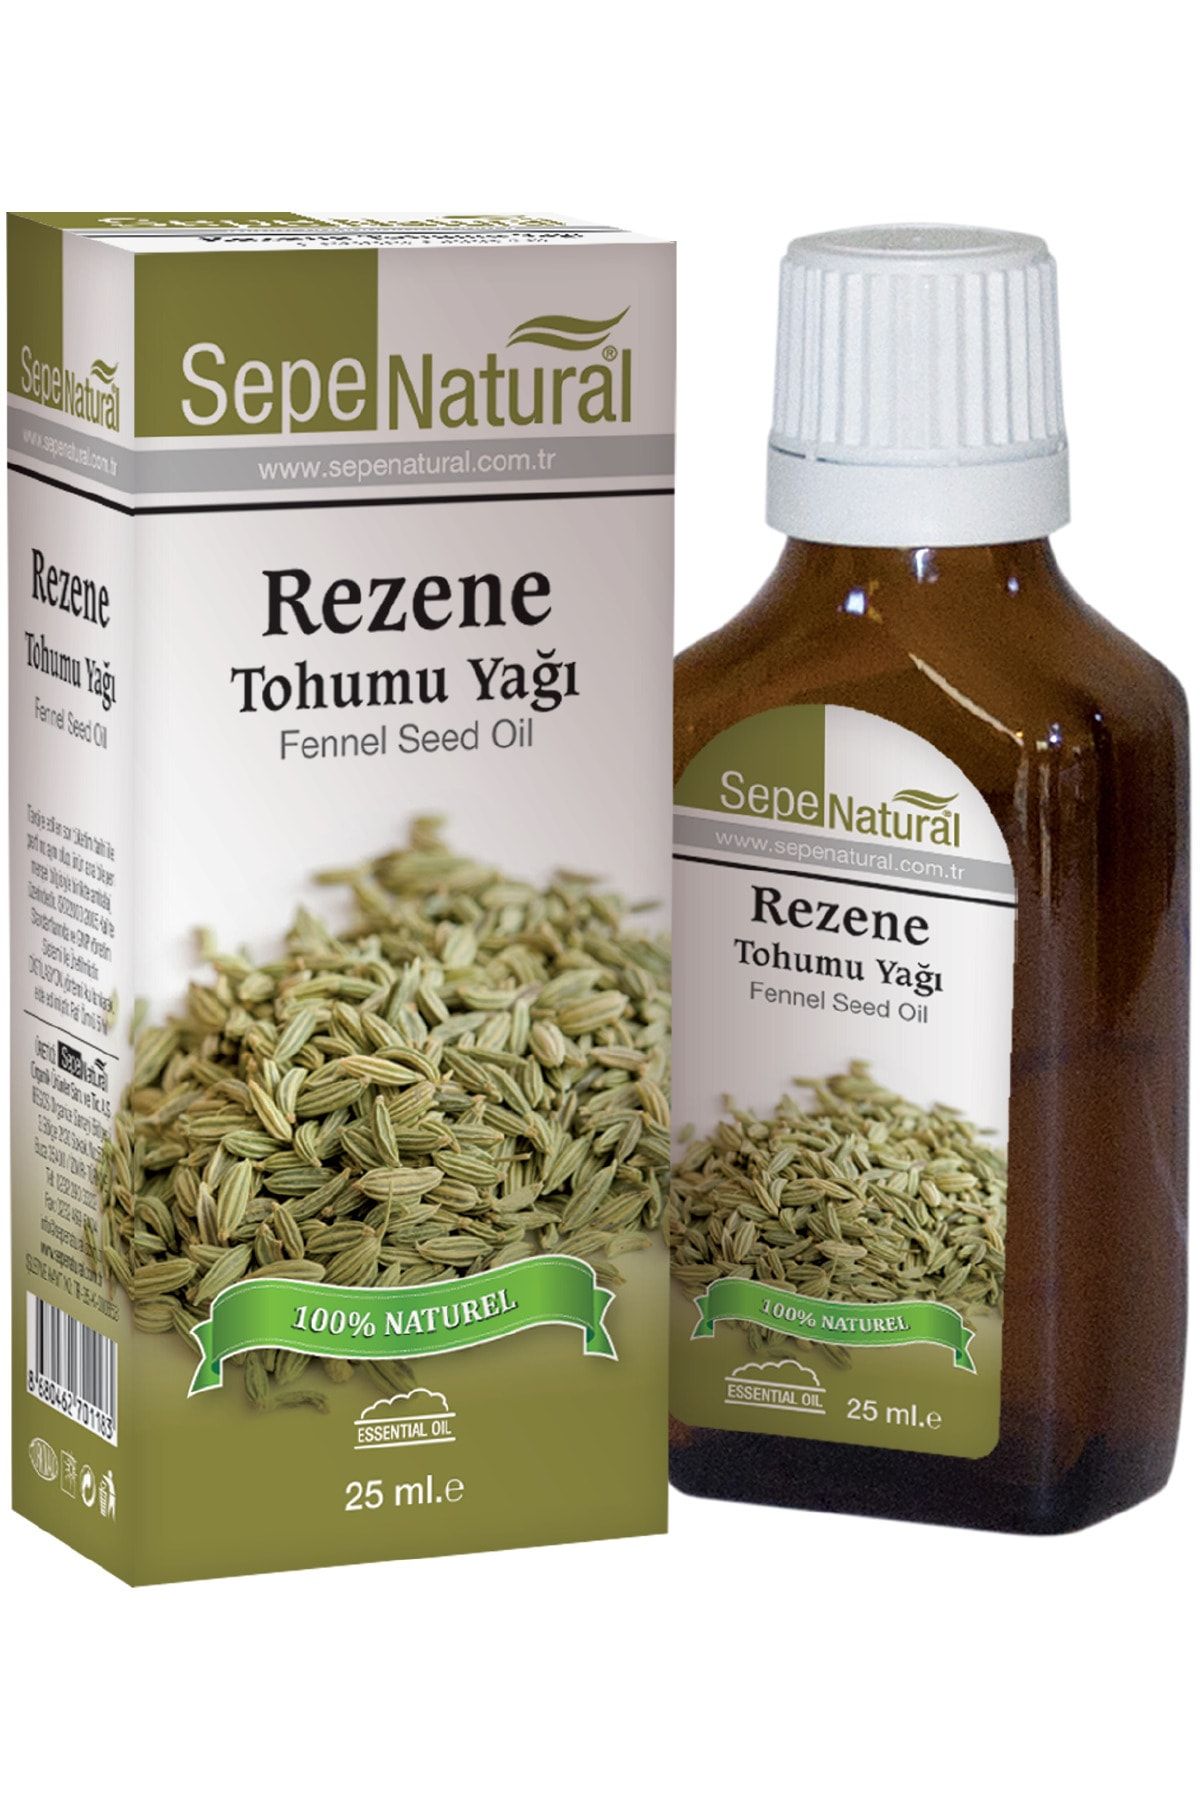 Sepe Natural Rezene Tohumu Yağı 25 Ml Rezene Yağı Fennel Seed Oil